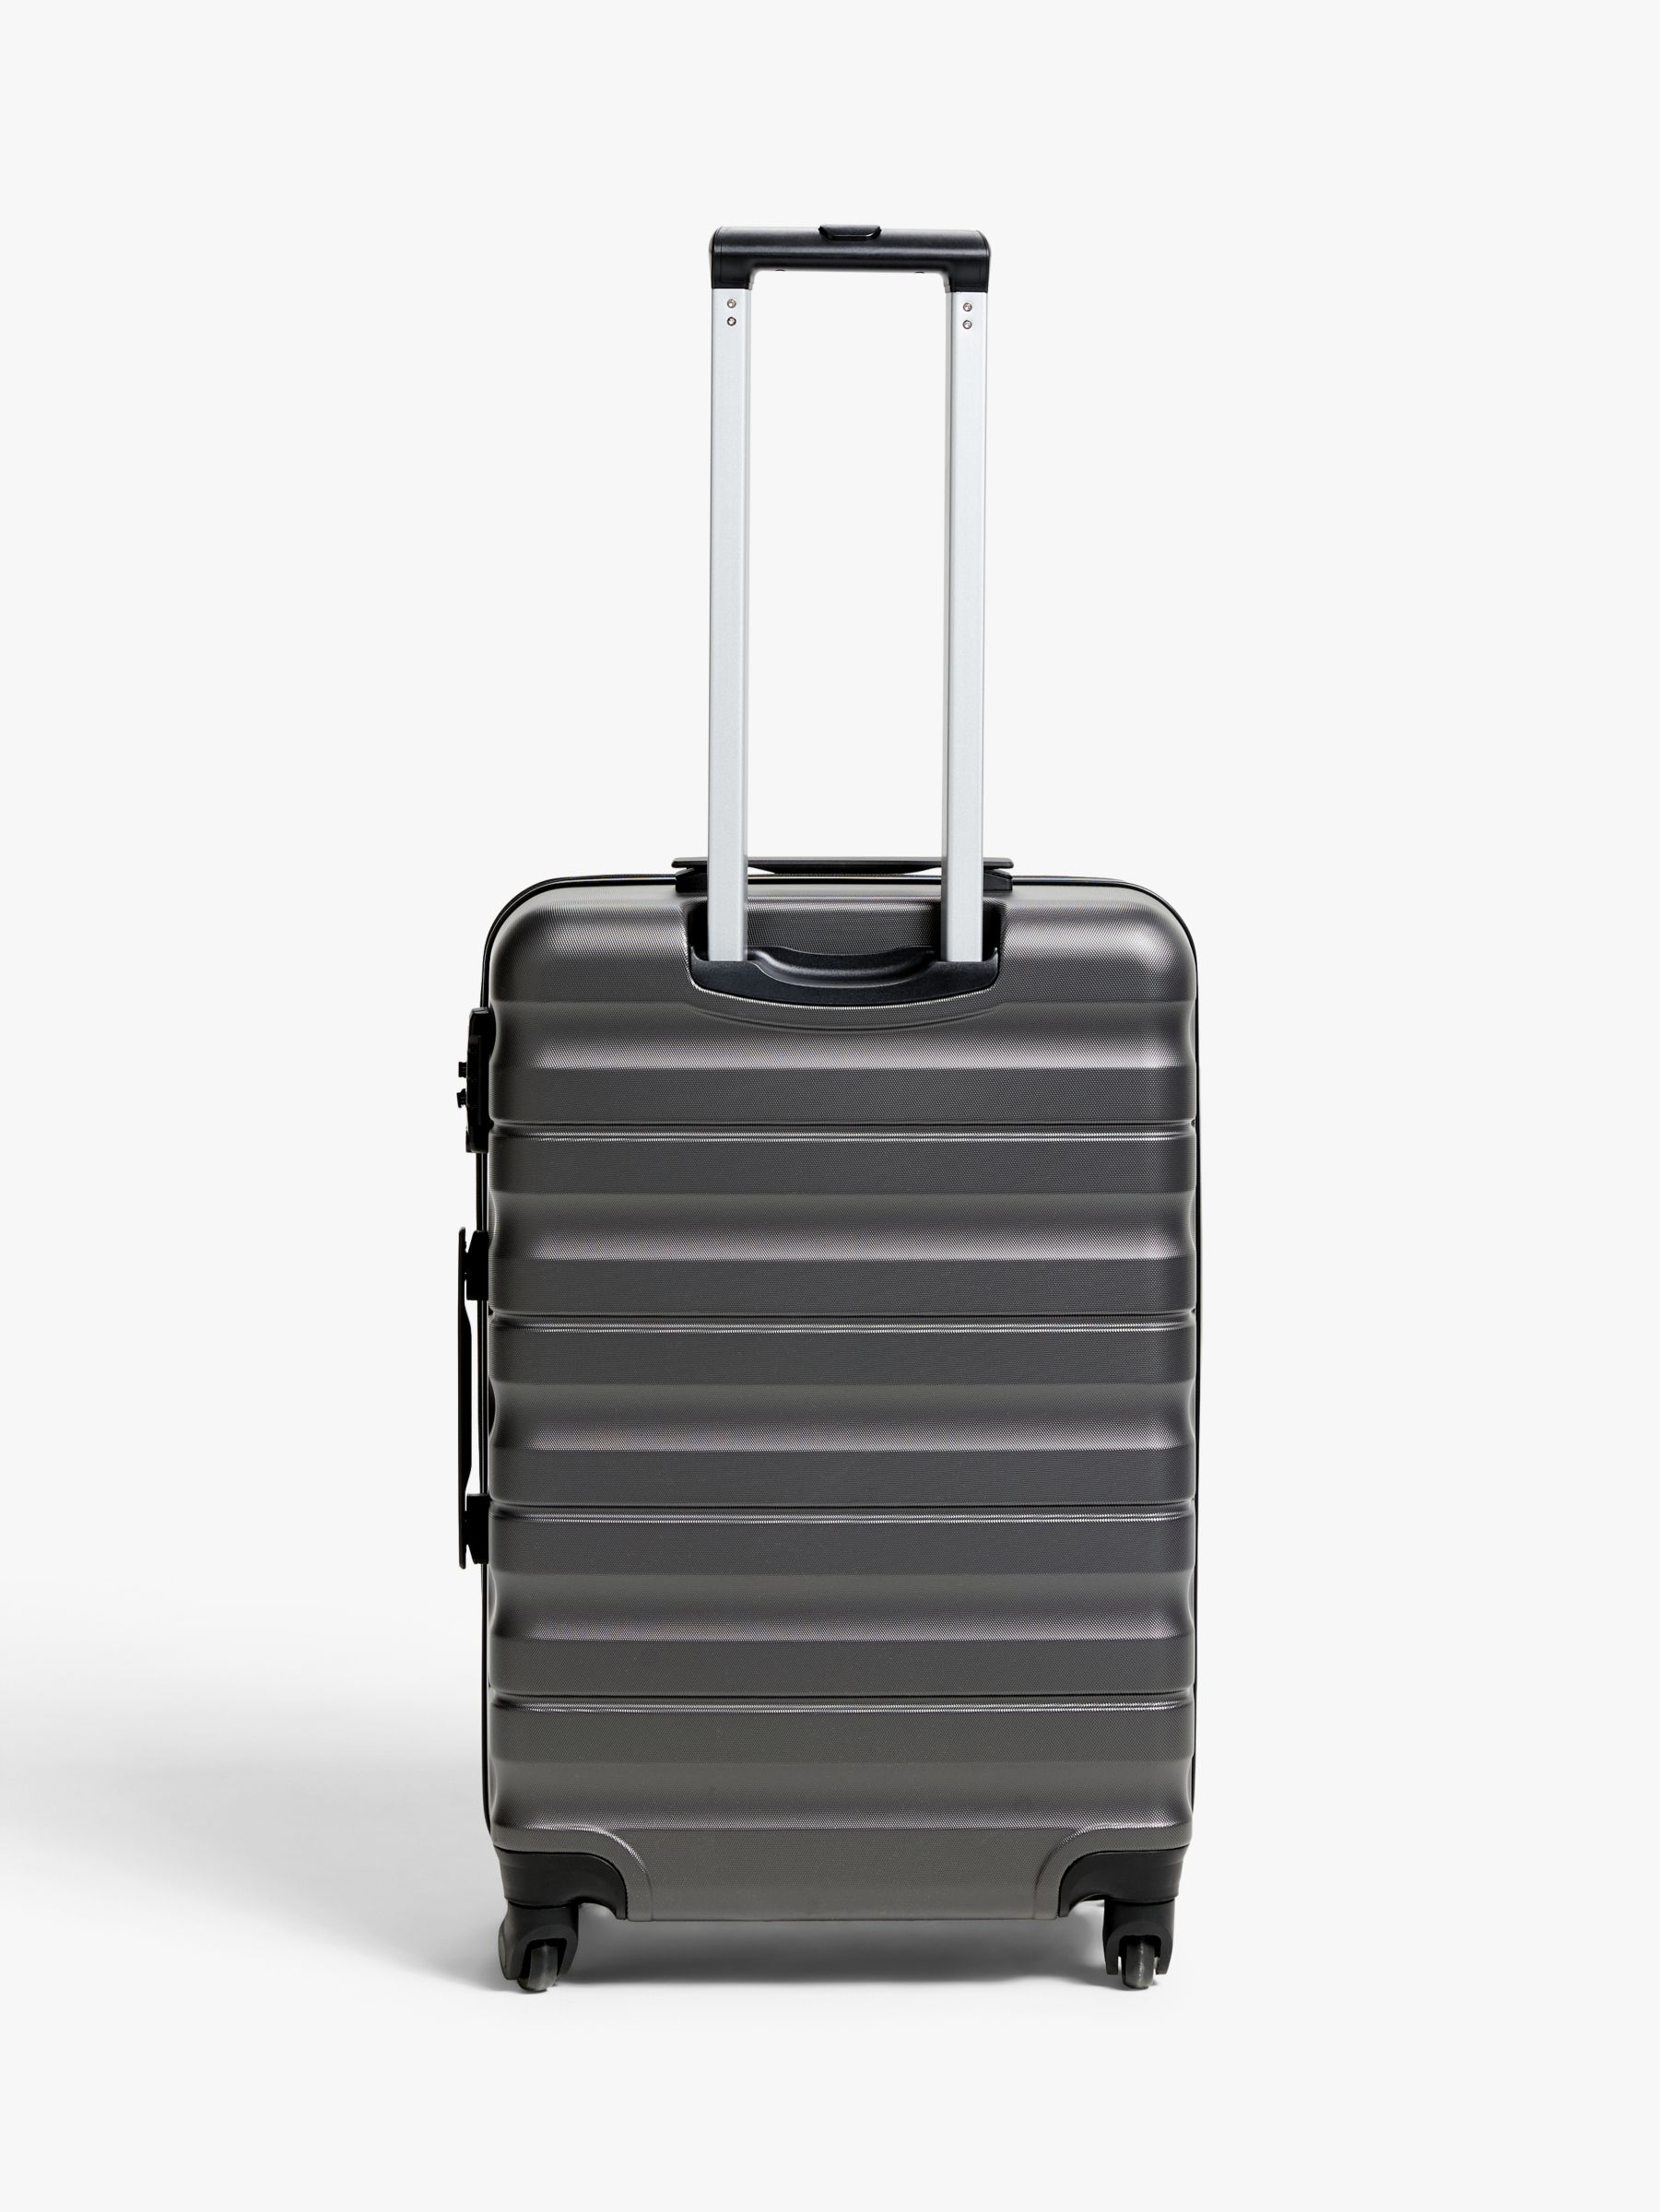 John Lewis ANYDAY Girona 65cm 4-Wheel Medium Suitcase, Grey